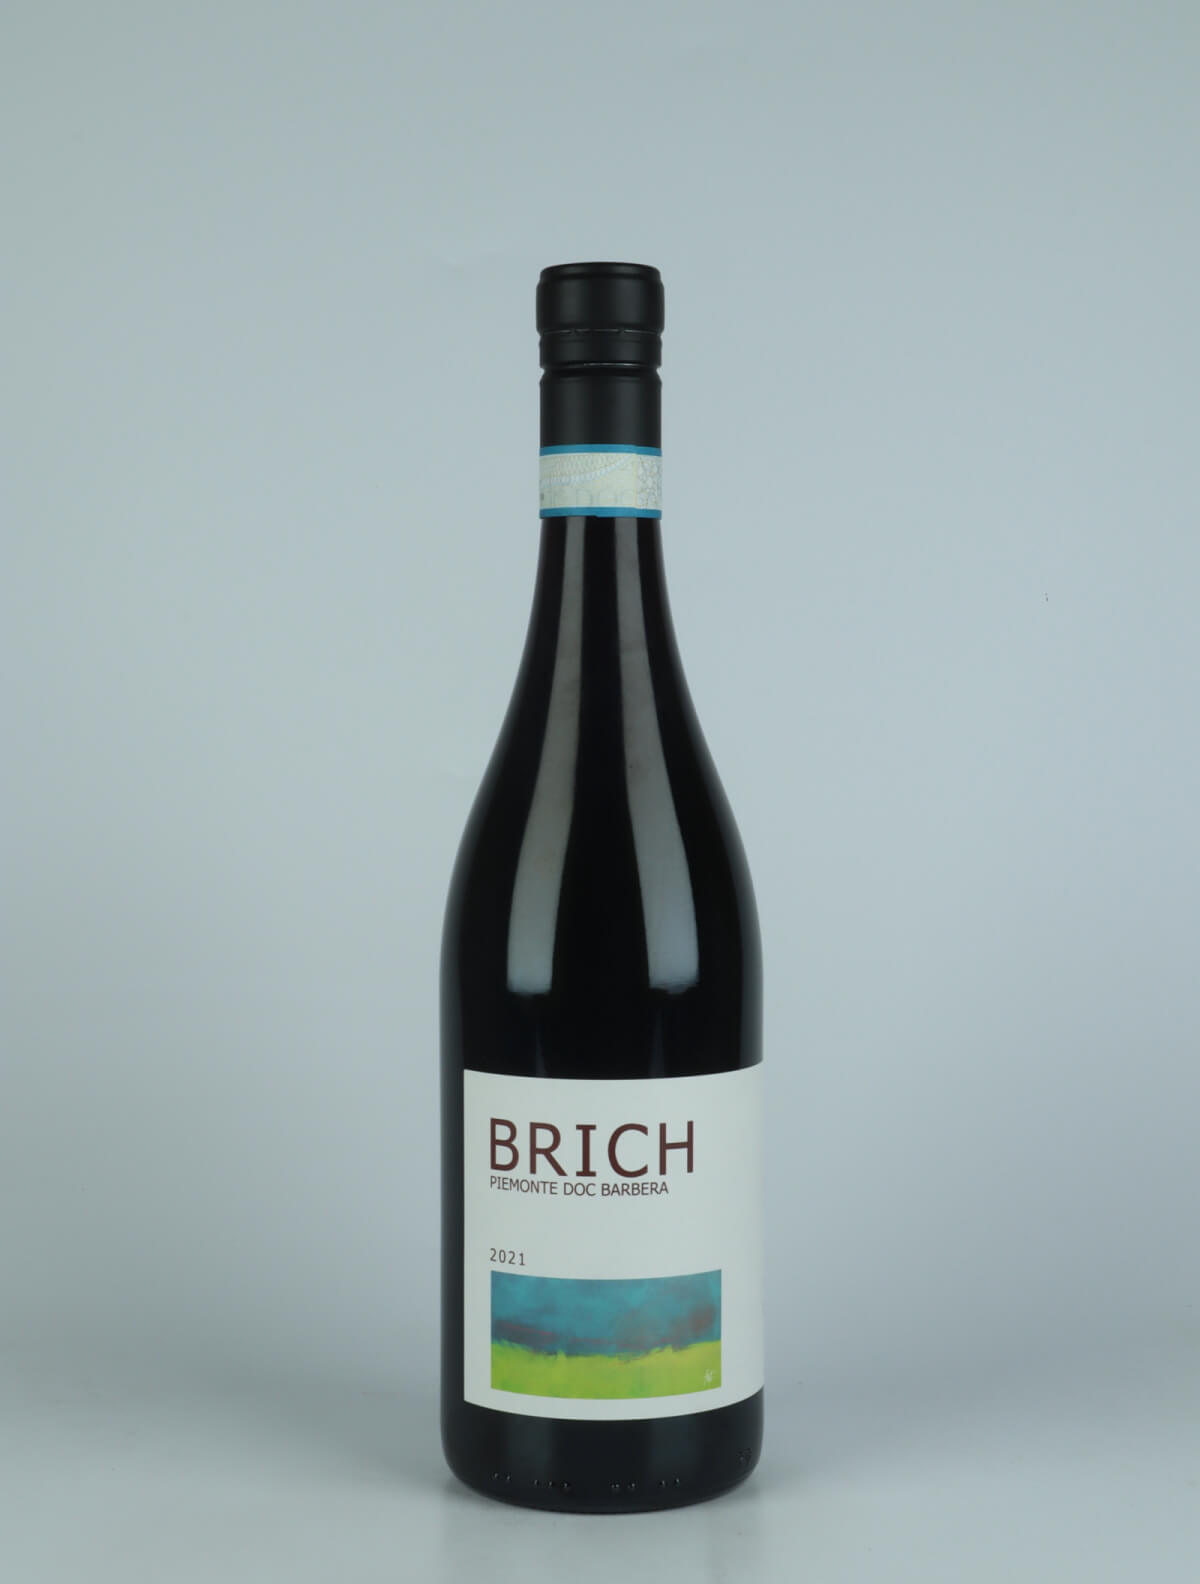 En flaske 2021 Barbera - Brich Rødvin fra Agricola Gaia, Piemonte i Italien